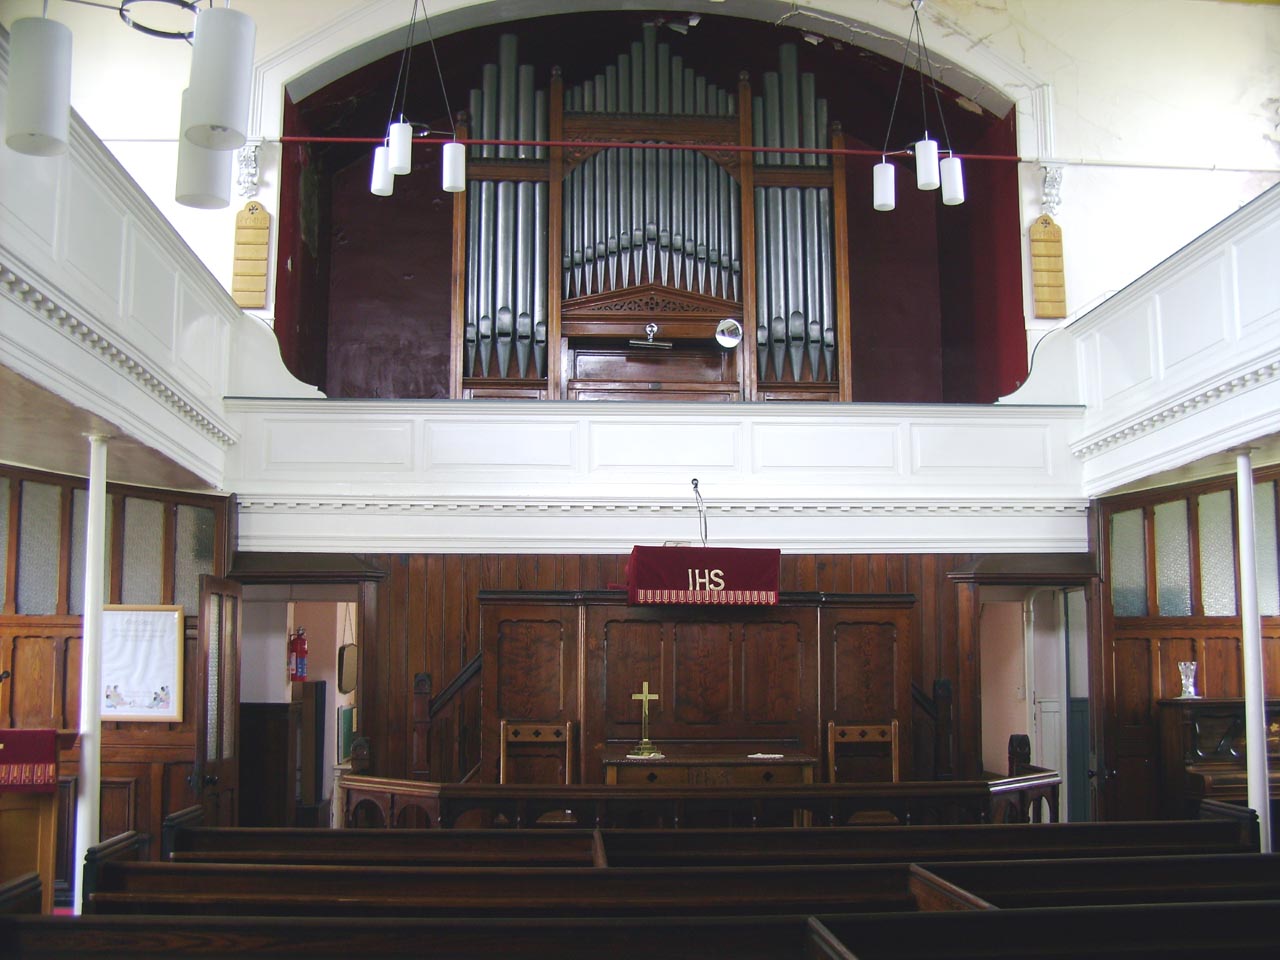 Haughton Green Methodist, interior